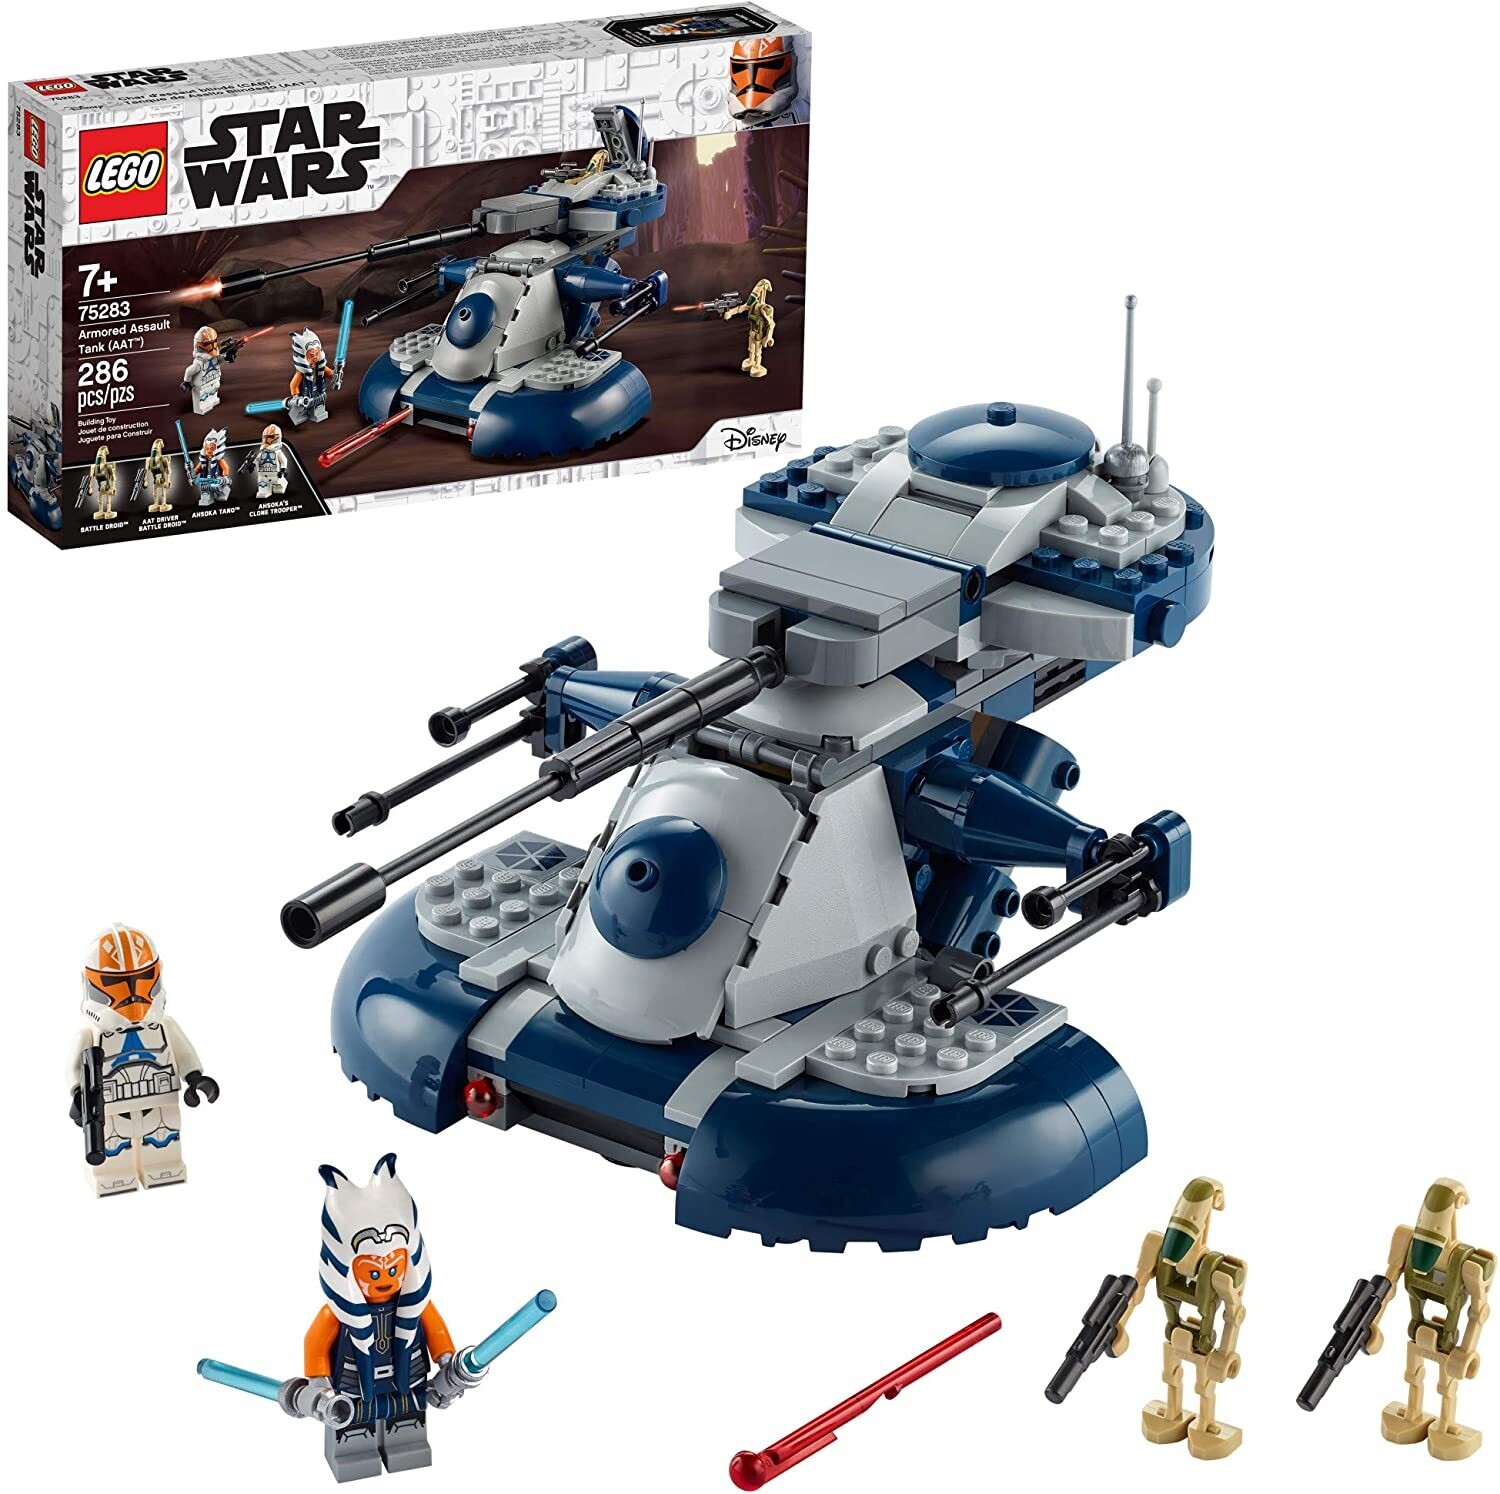 Lego 75283 Star Wars Armored Assault Tank